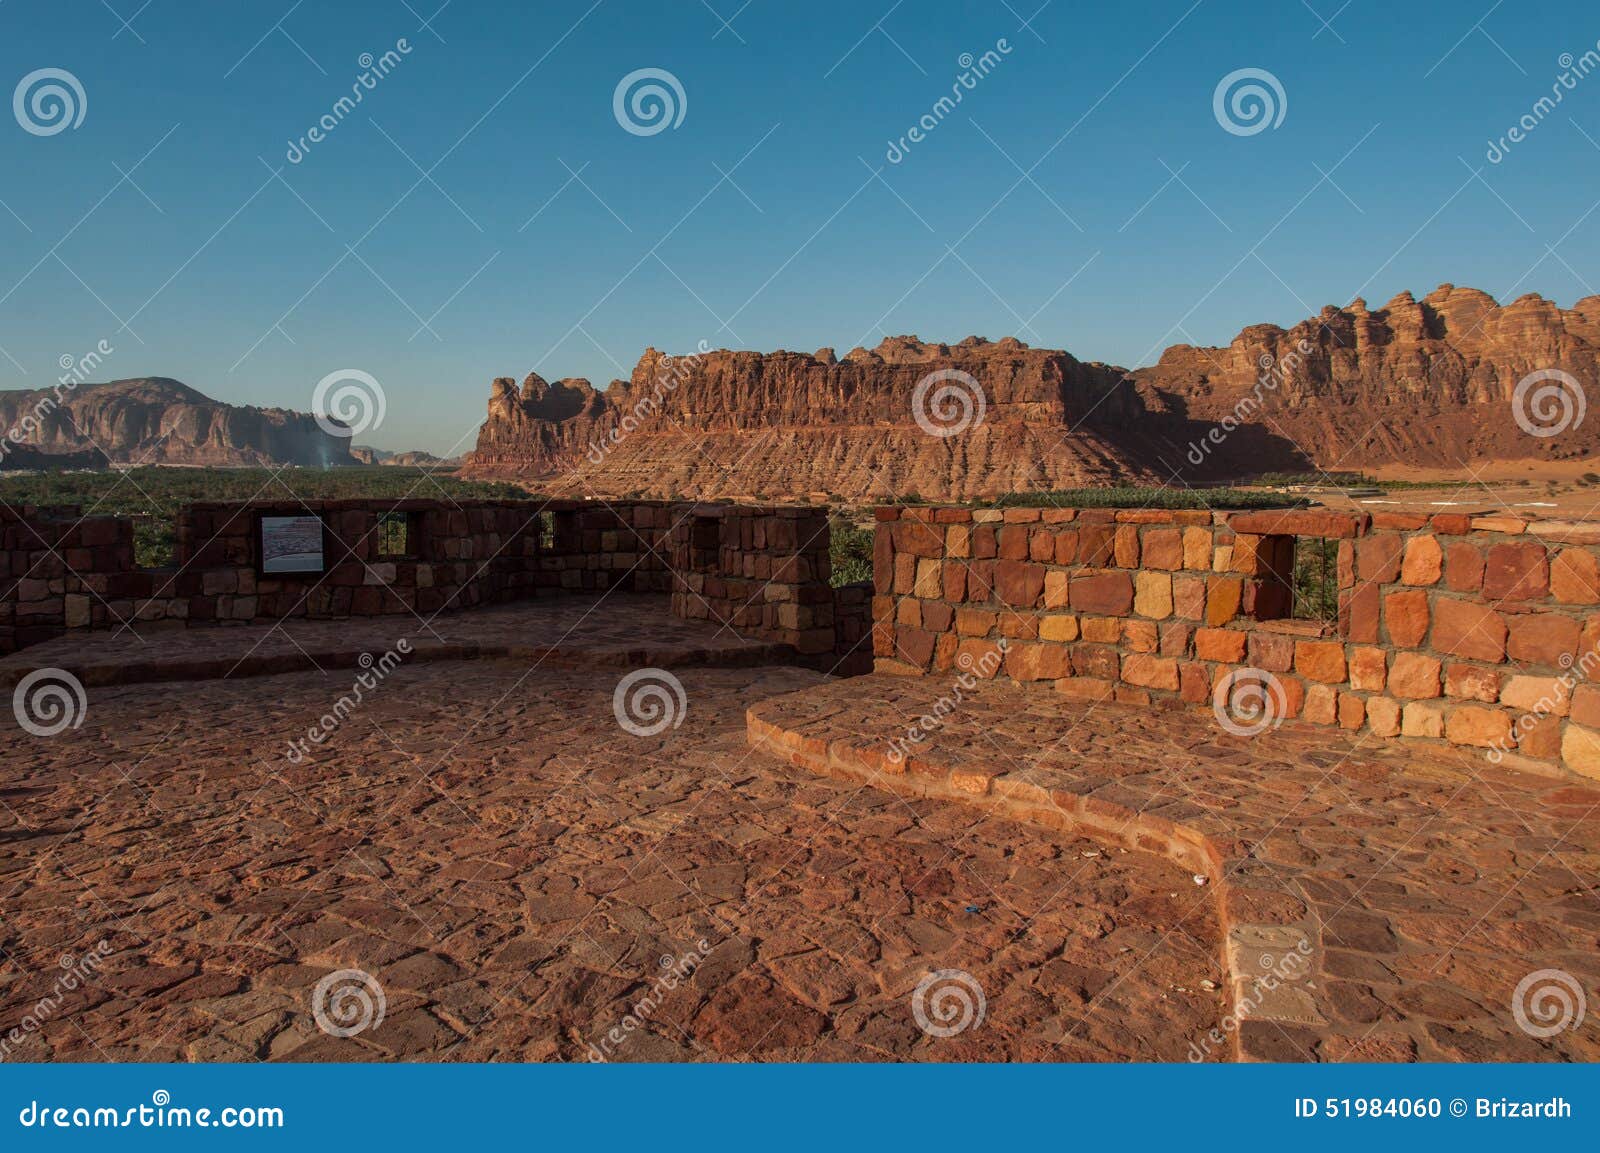 rock formations on top of al ula old city fort, saudi arabia